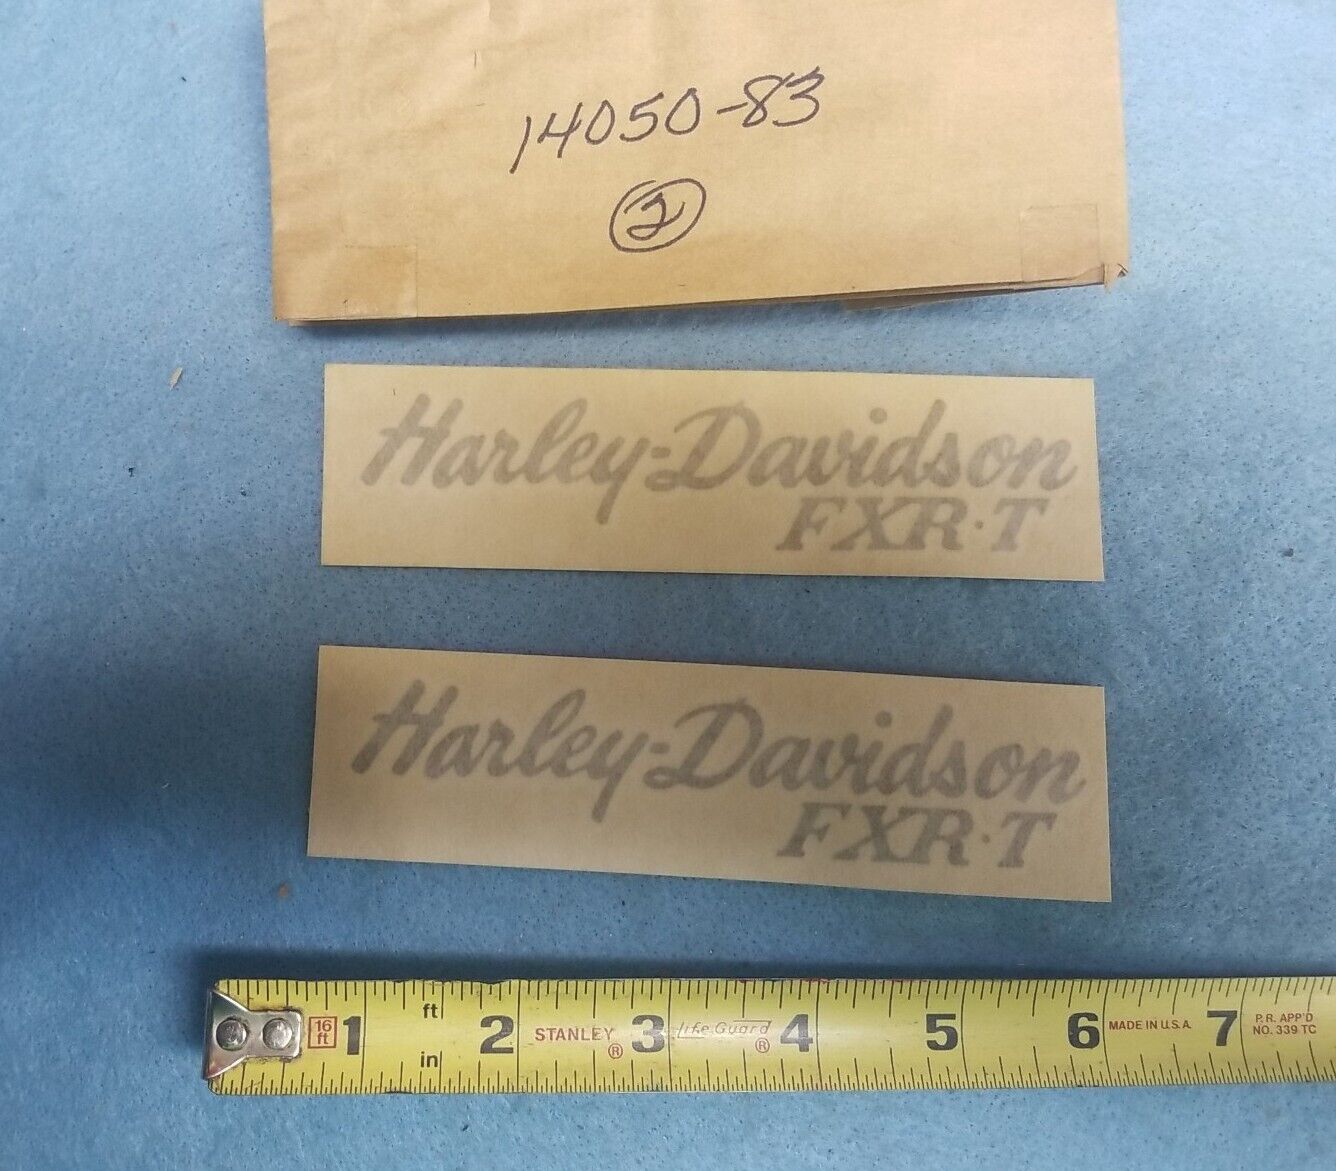 NOS Pair of Harley Davidson saddlebags fairing tank decal PN 14050-83 FXR  FXRT | eBay